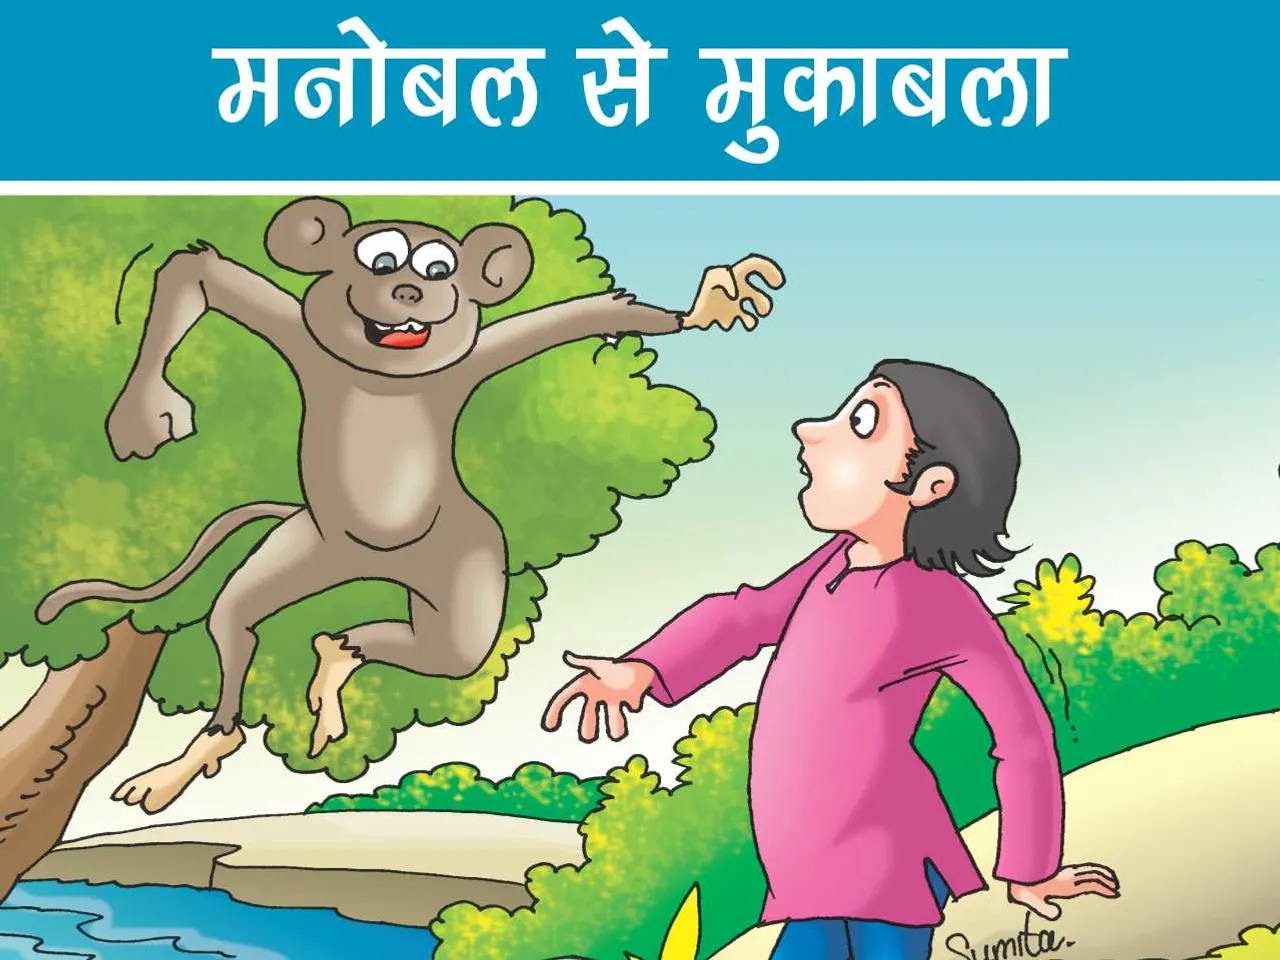 Boy and Monkey near water body cartoon image